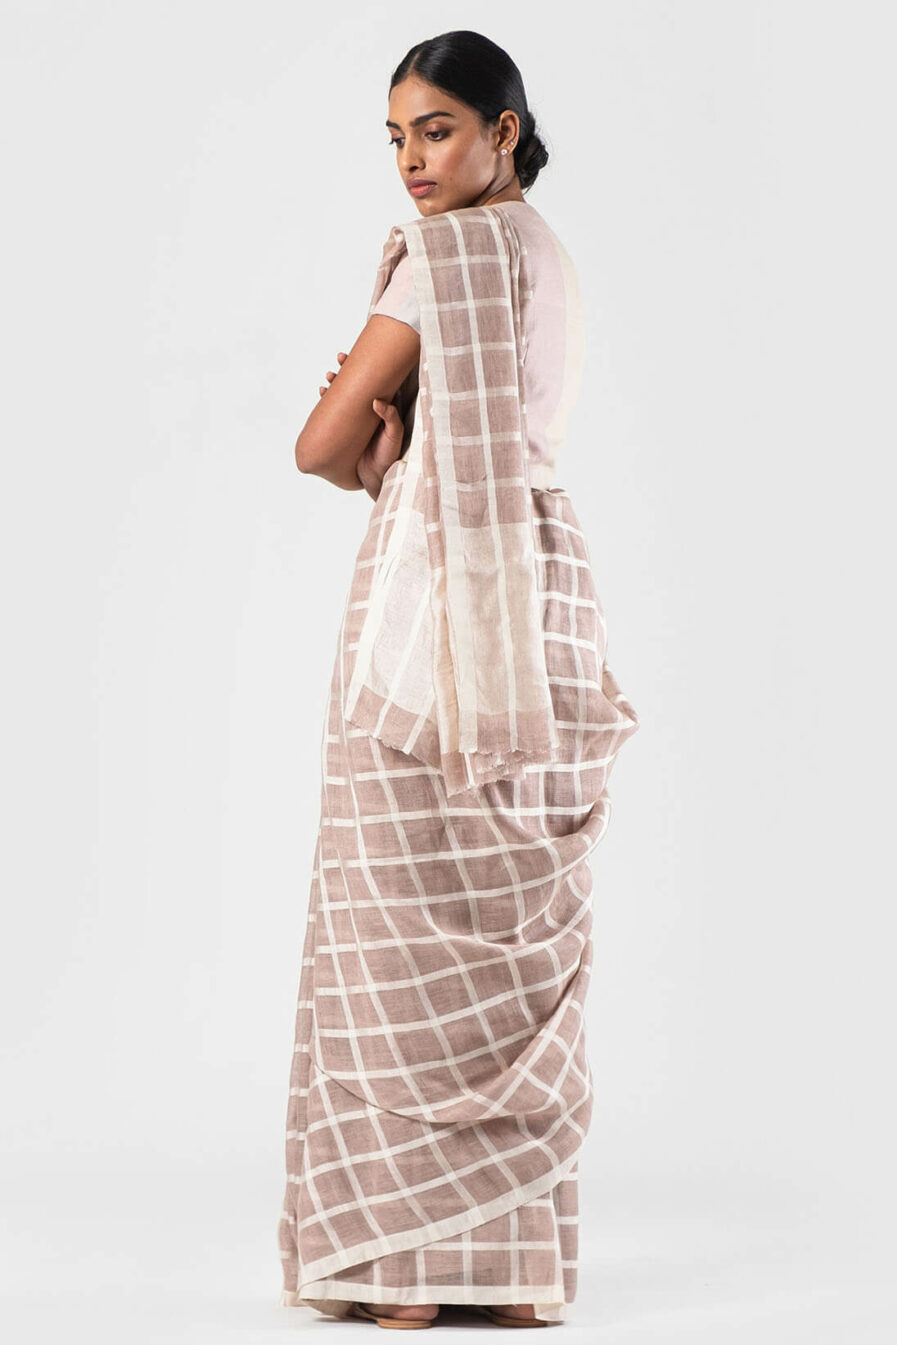 Anavila Beige Ivory silk grid linen sari